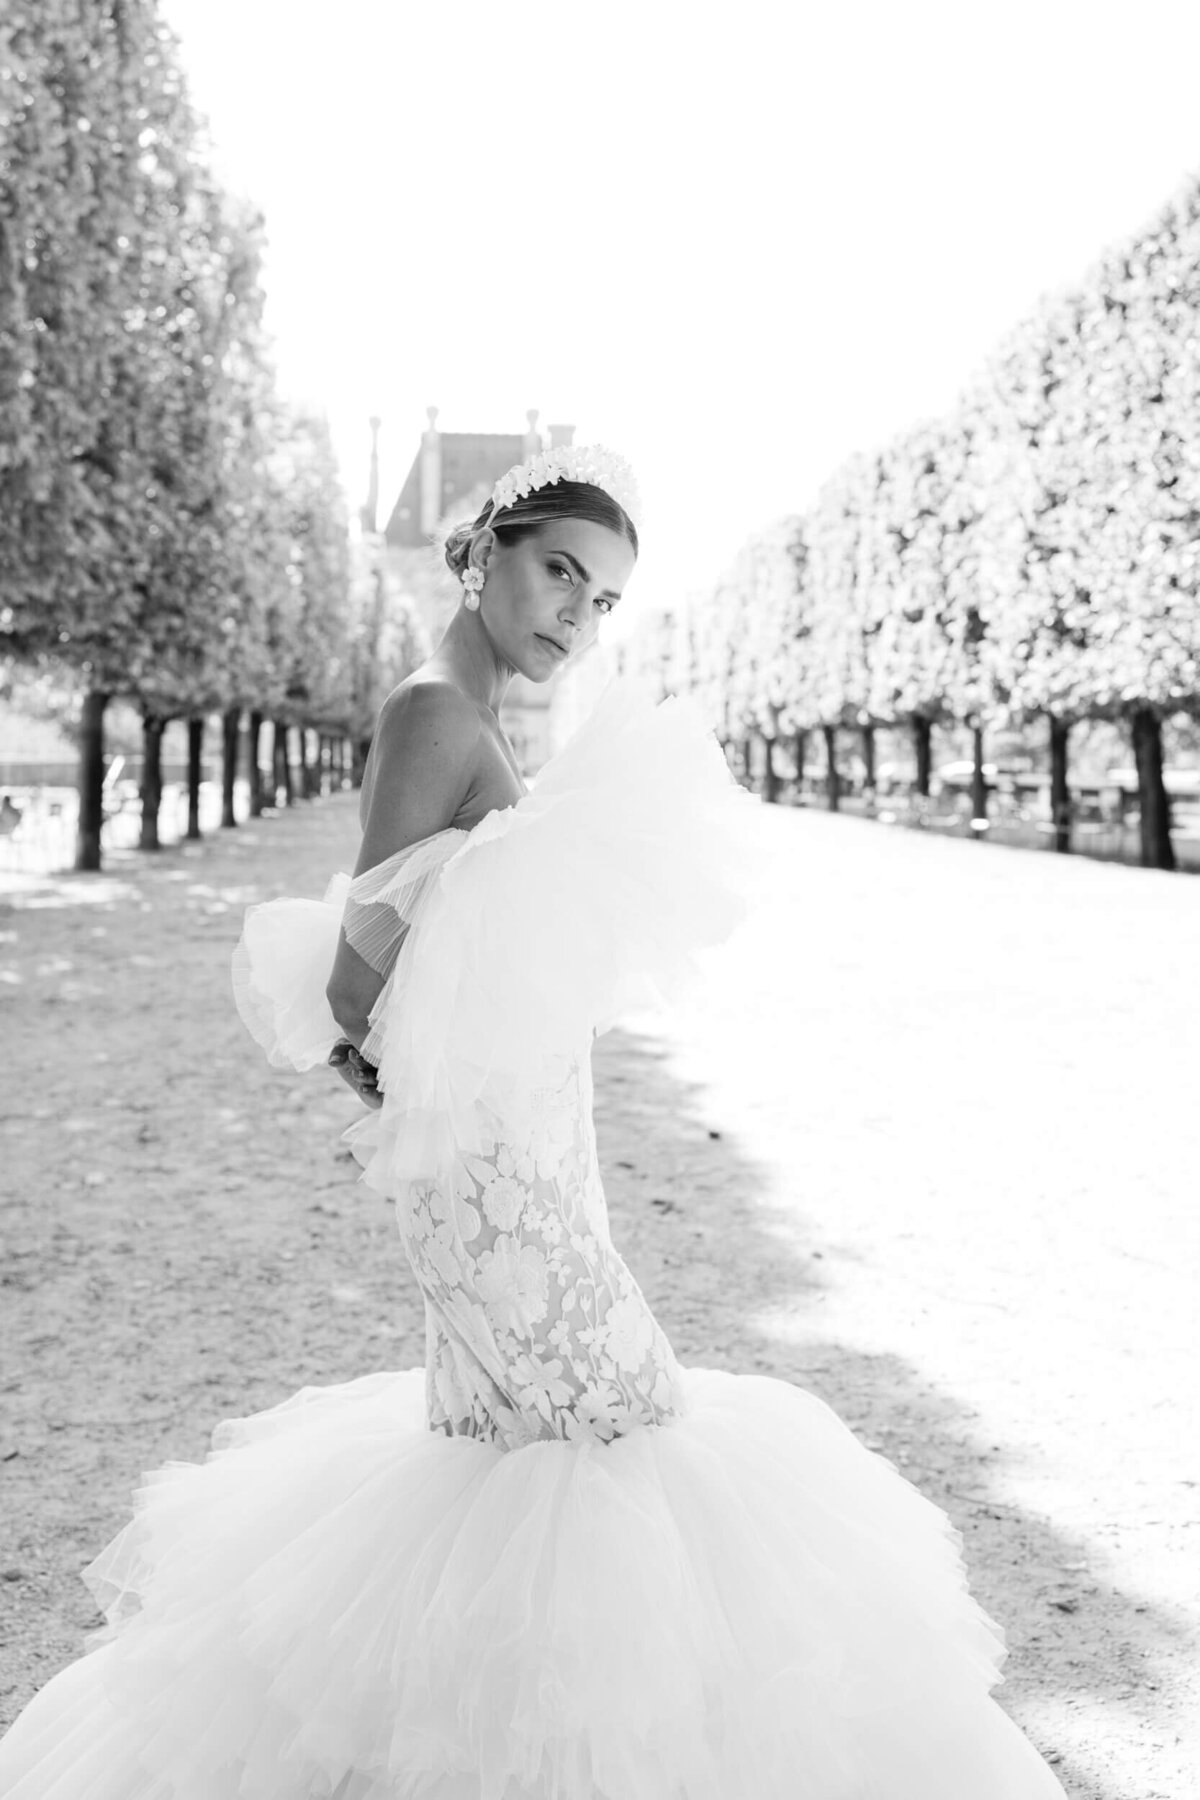 Jayce-Keil-Photo-Film-london-paris-ireland--destination-wedding-photography-101